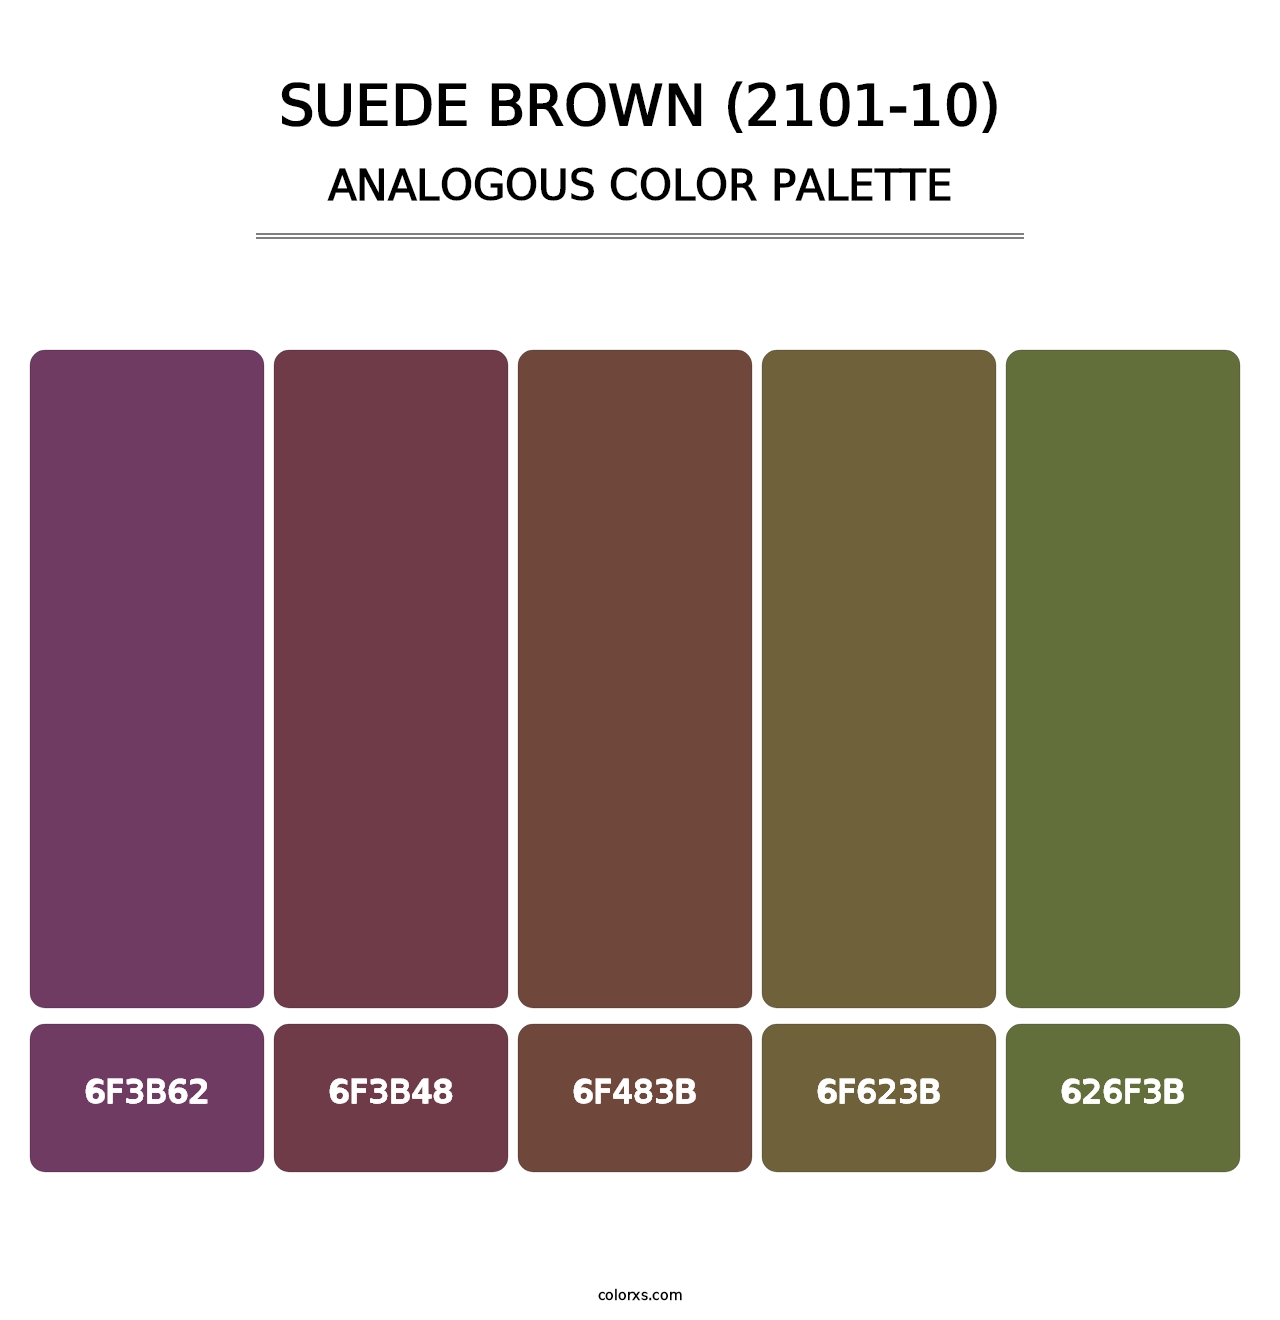 Suede Brown (2101-10) - Analogous Color Palette